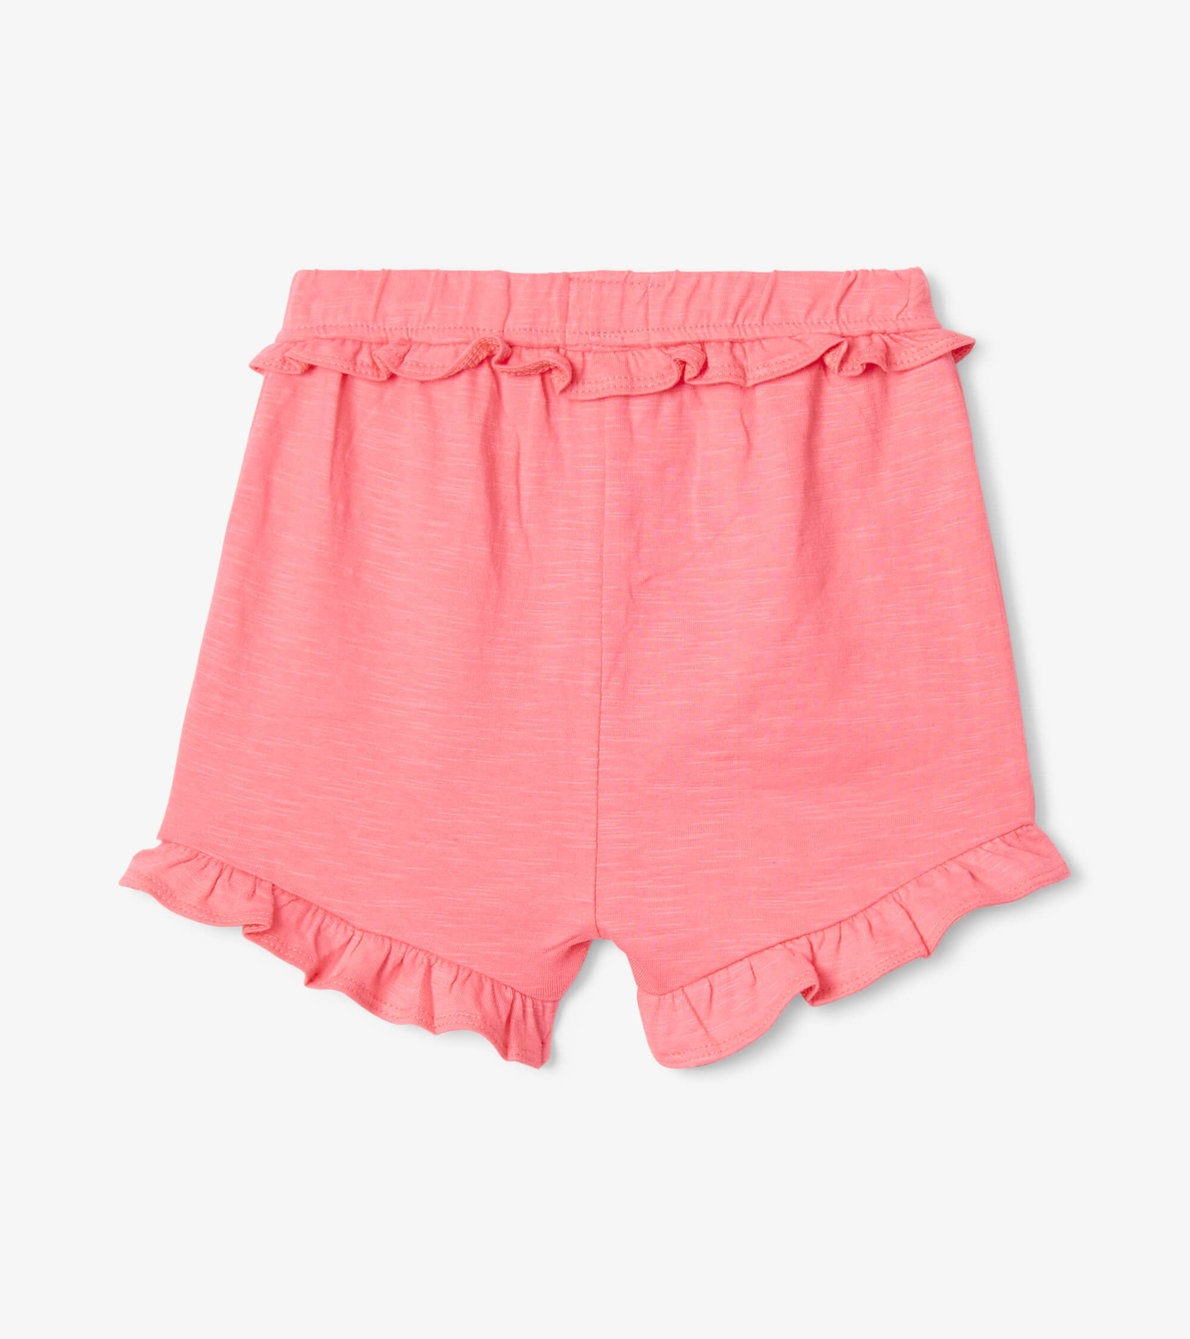 View larger image of Baby & Toddler Girls Pink Ruffle Shorts